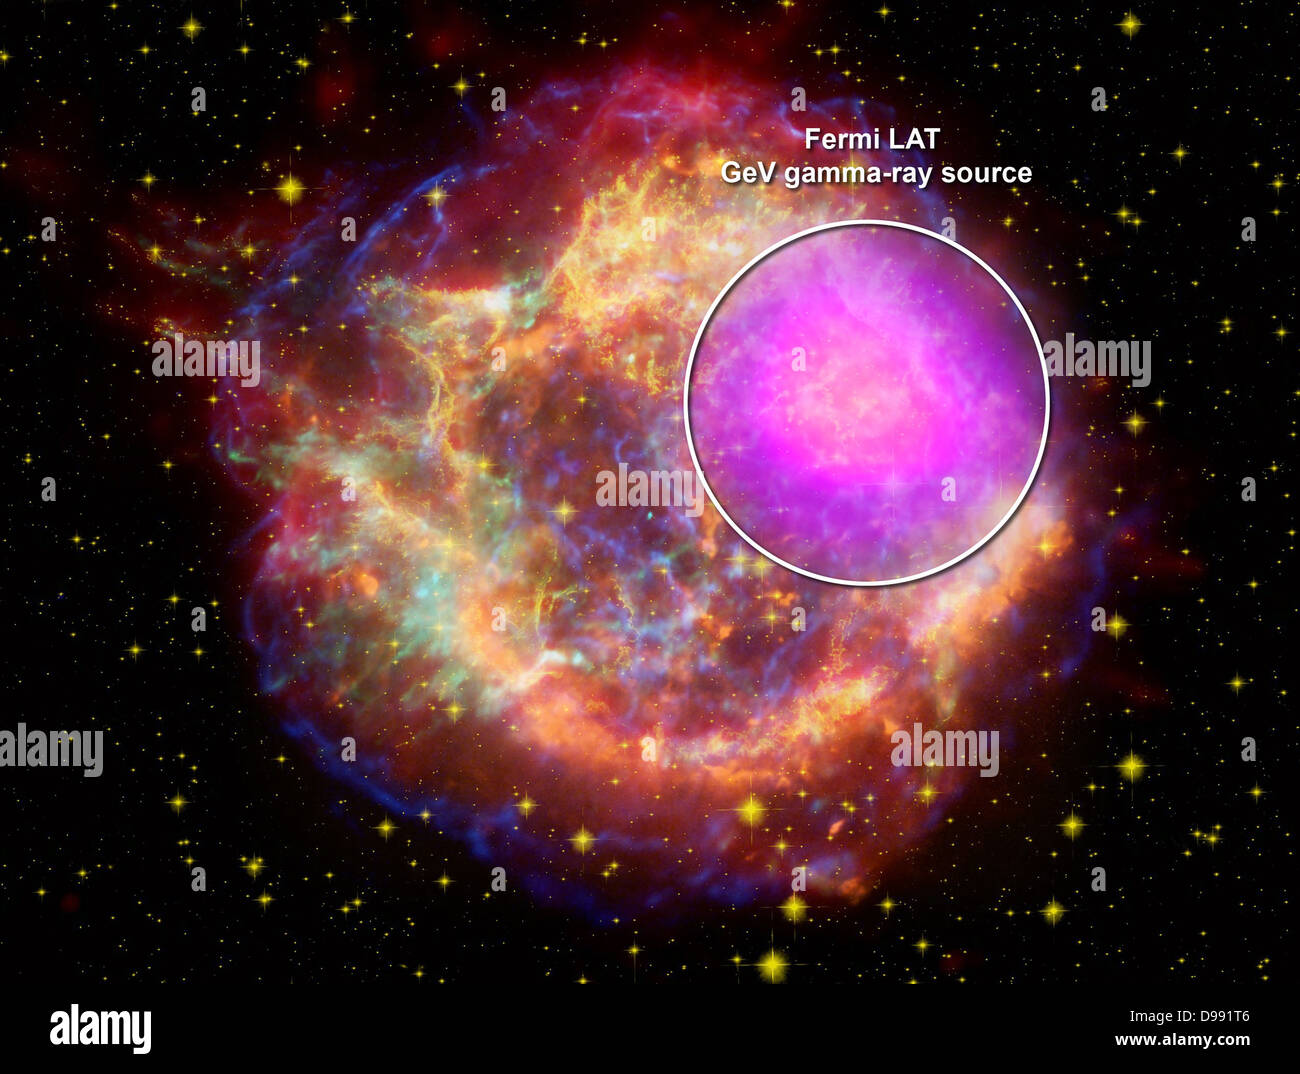 Telescopio de rayos x fotografías e imágenes de alta resolución - Alamy